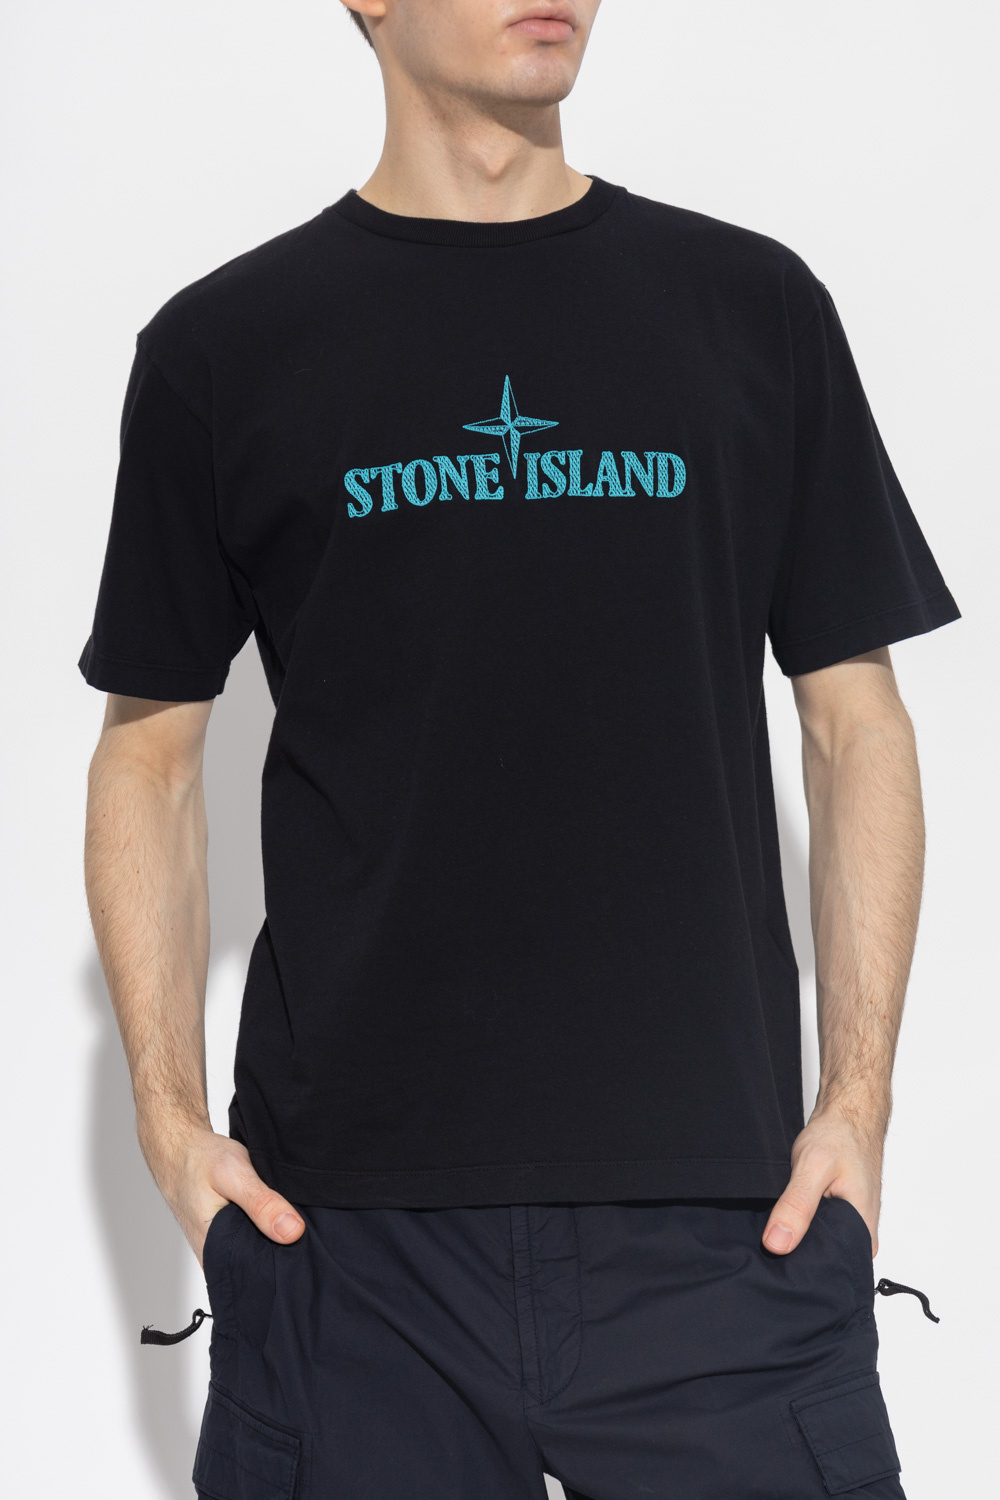 Stone Island ami paris checked buttoned jacket item